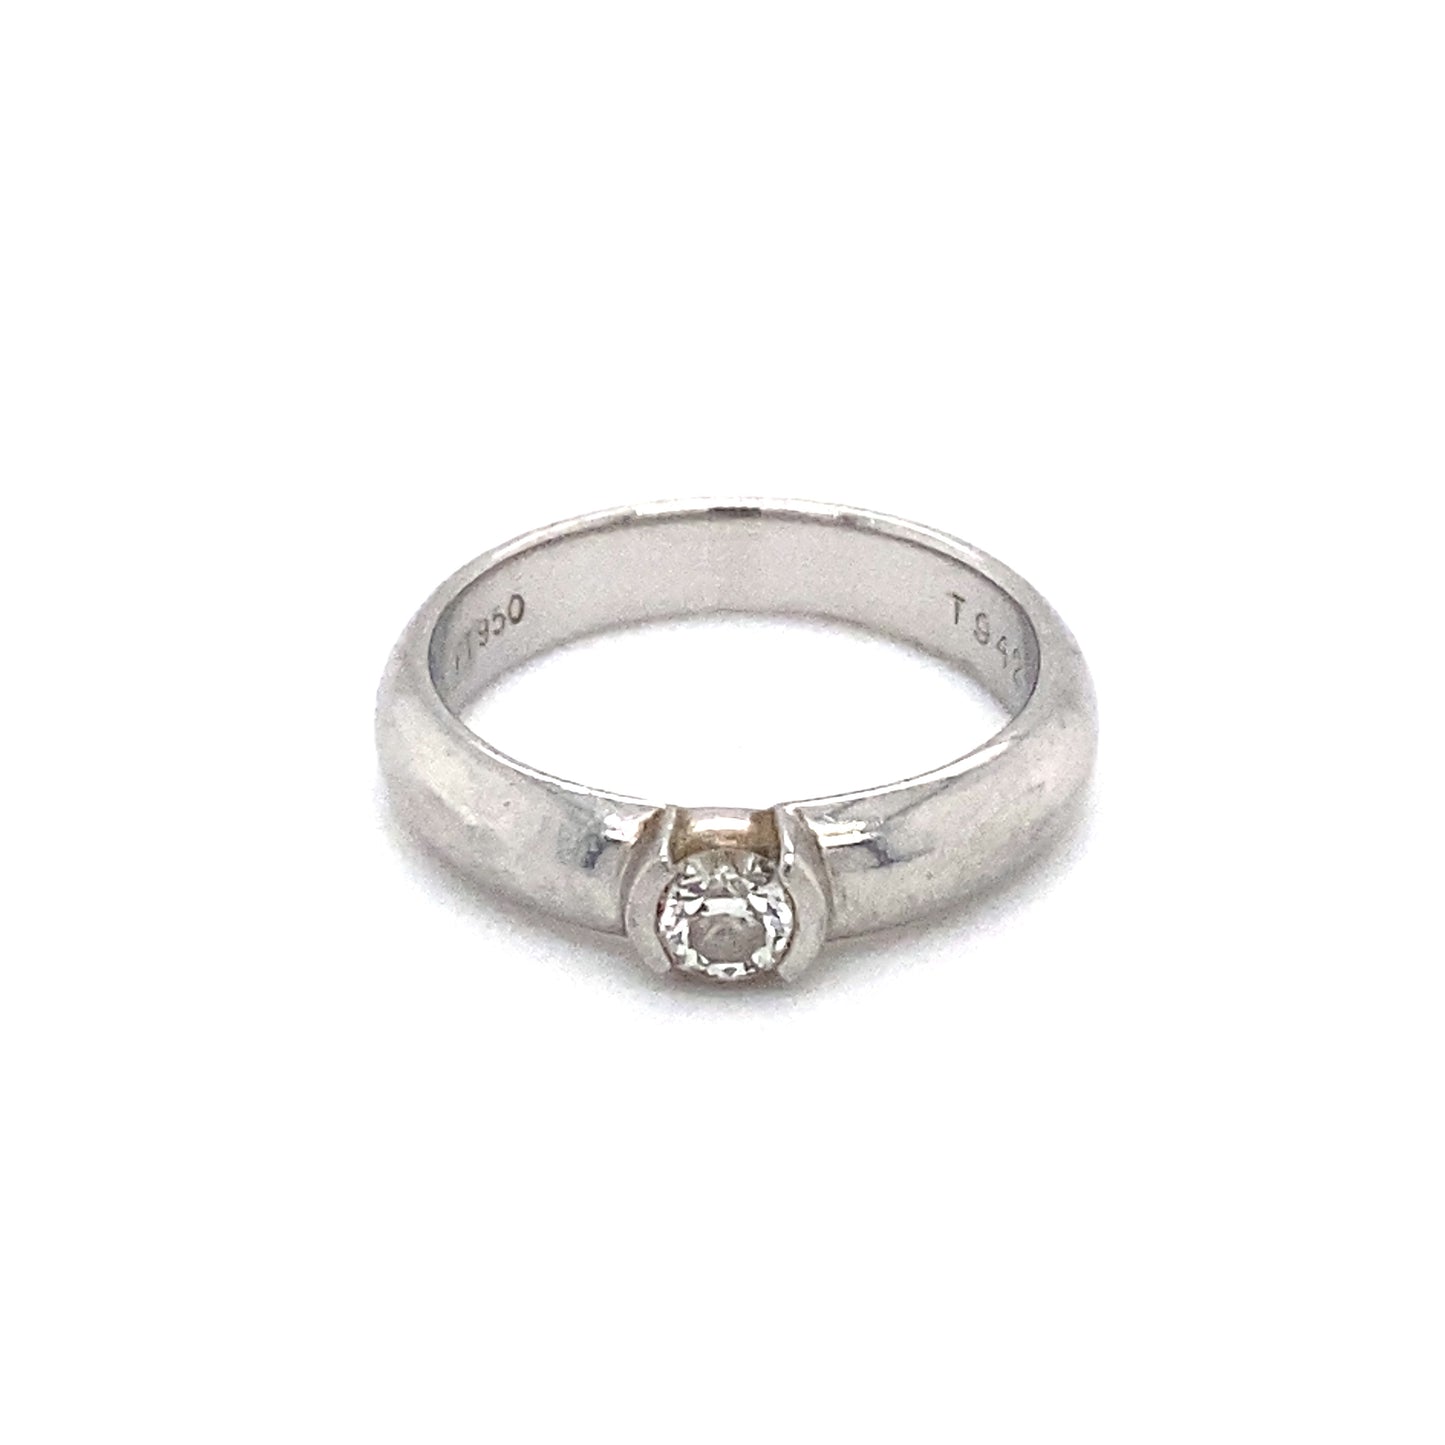 Tiffany & Co. 0.21ct Diamond Engagement Ring in Platinum